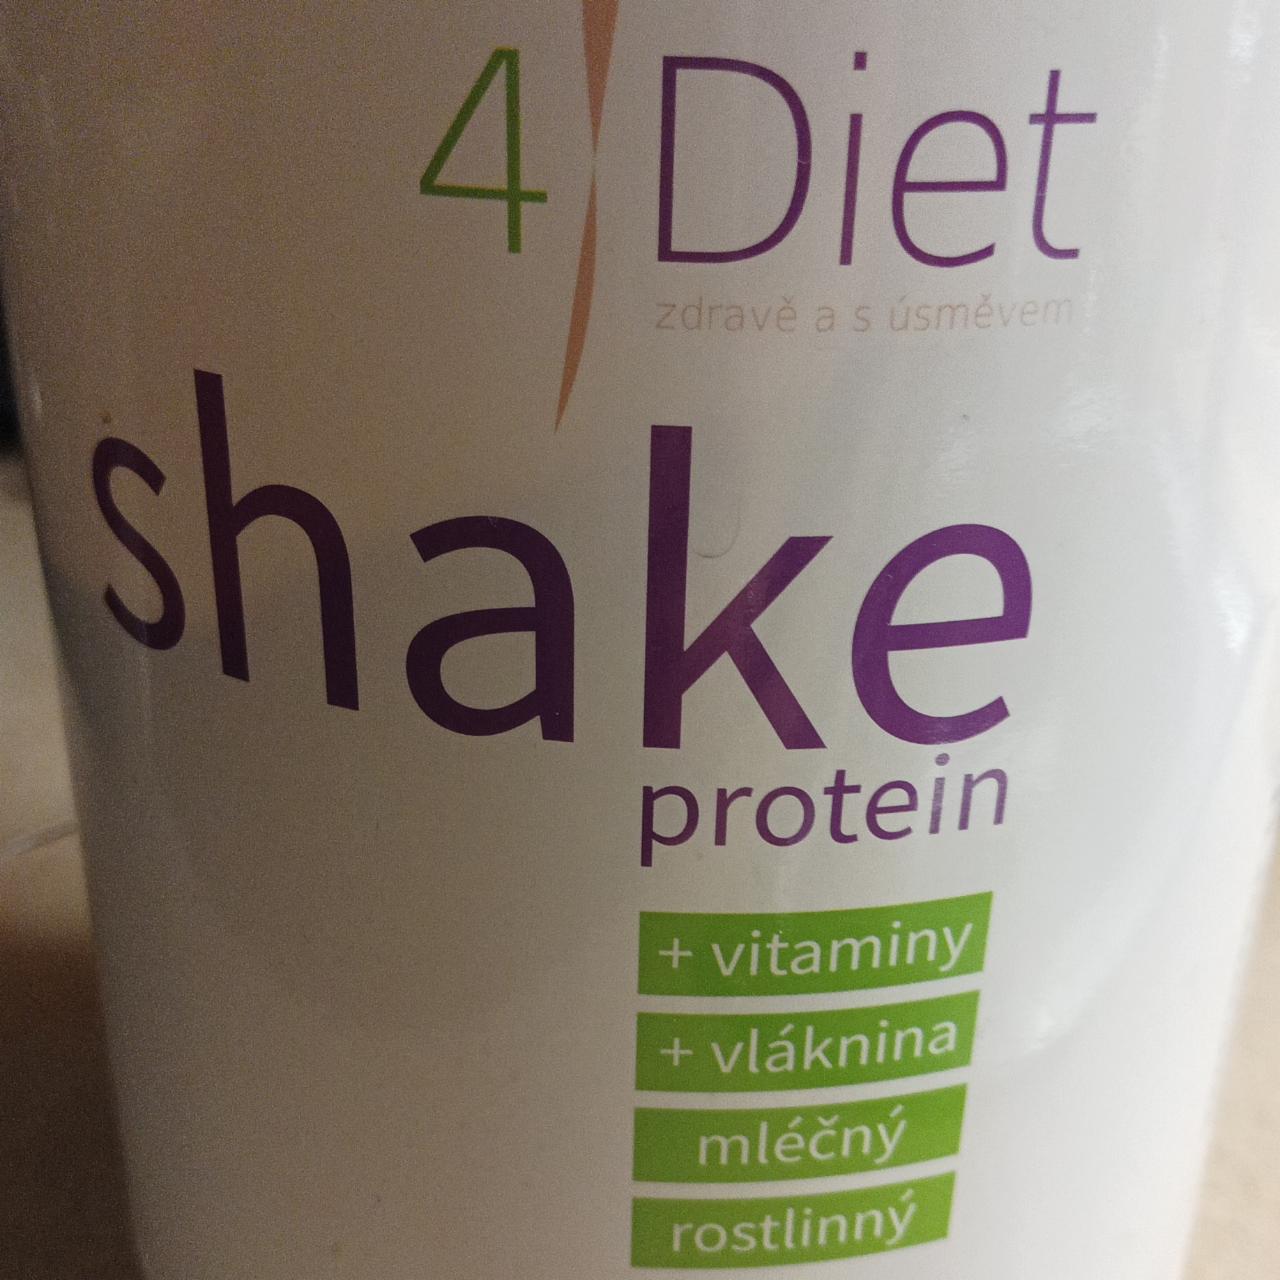 Fotografie - Shake protein LESNÍ PLODY 4 Diet